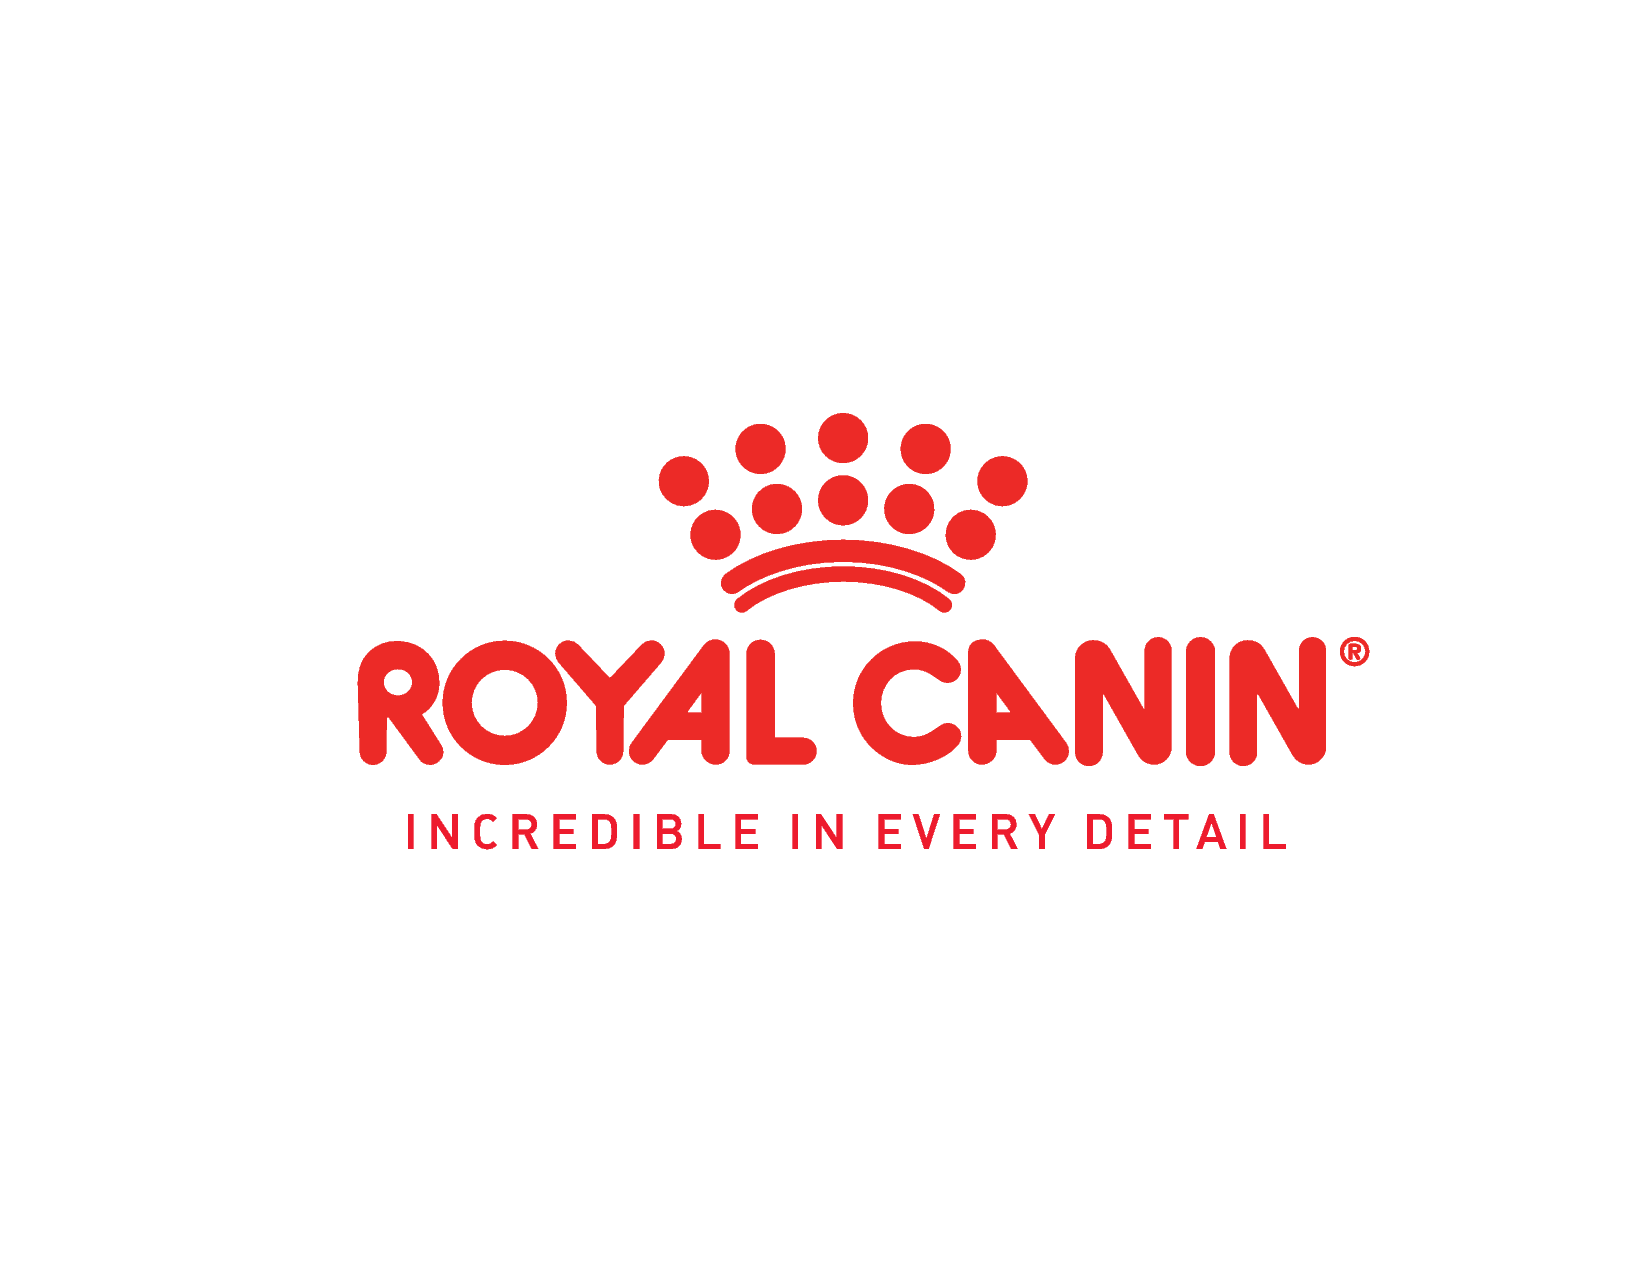 The Royal Canin corporate logo.